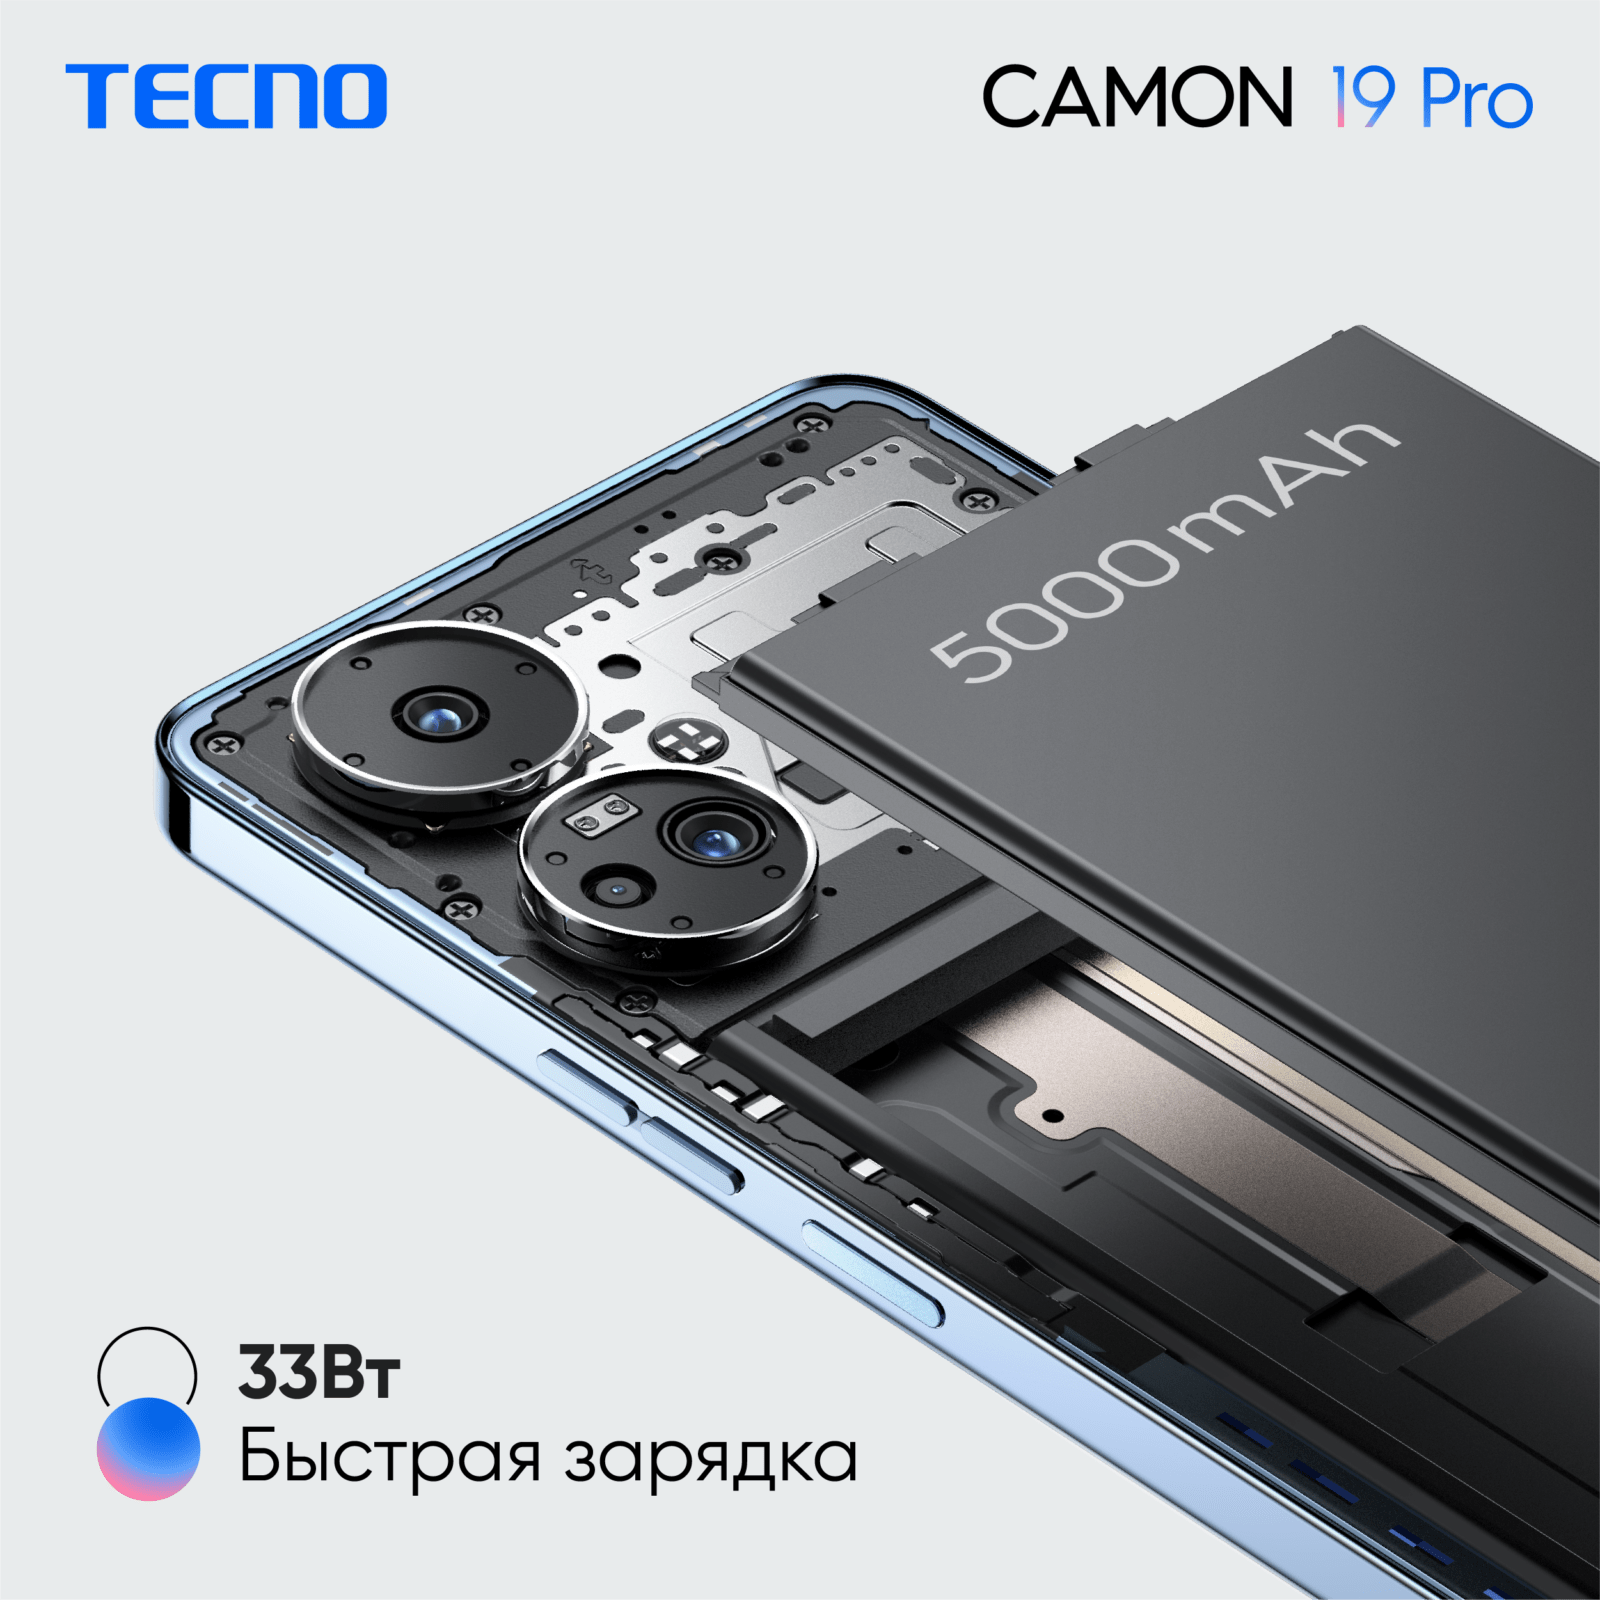 Tecno начал продажи смартфонов CAMON 19 в России (KSP CAMON 19 Pro 04)